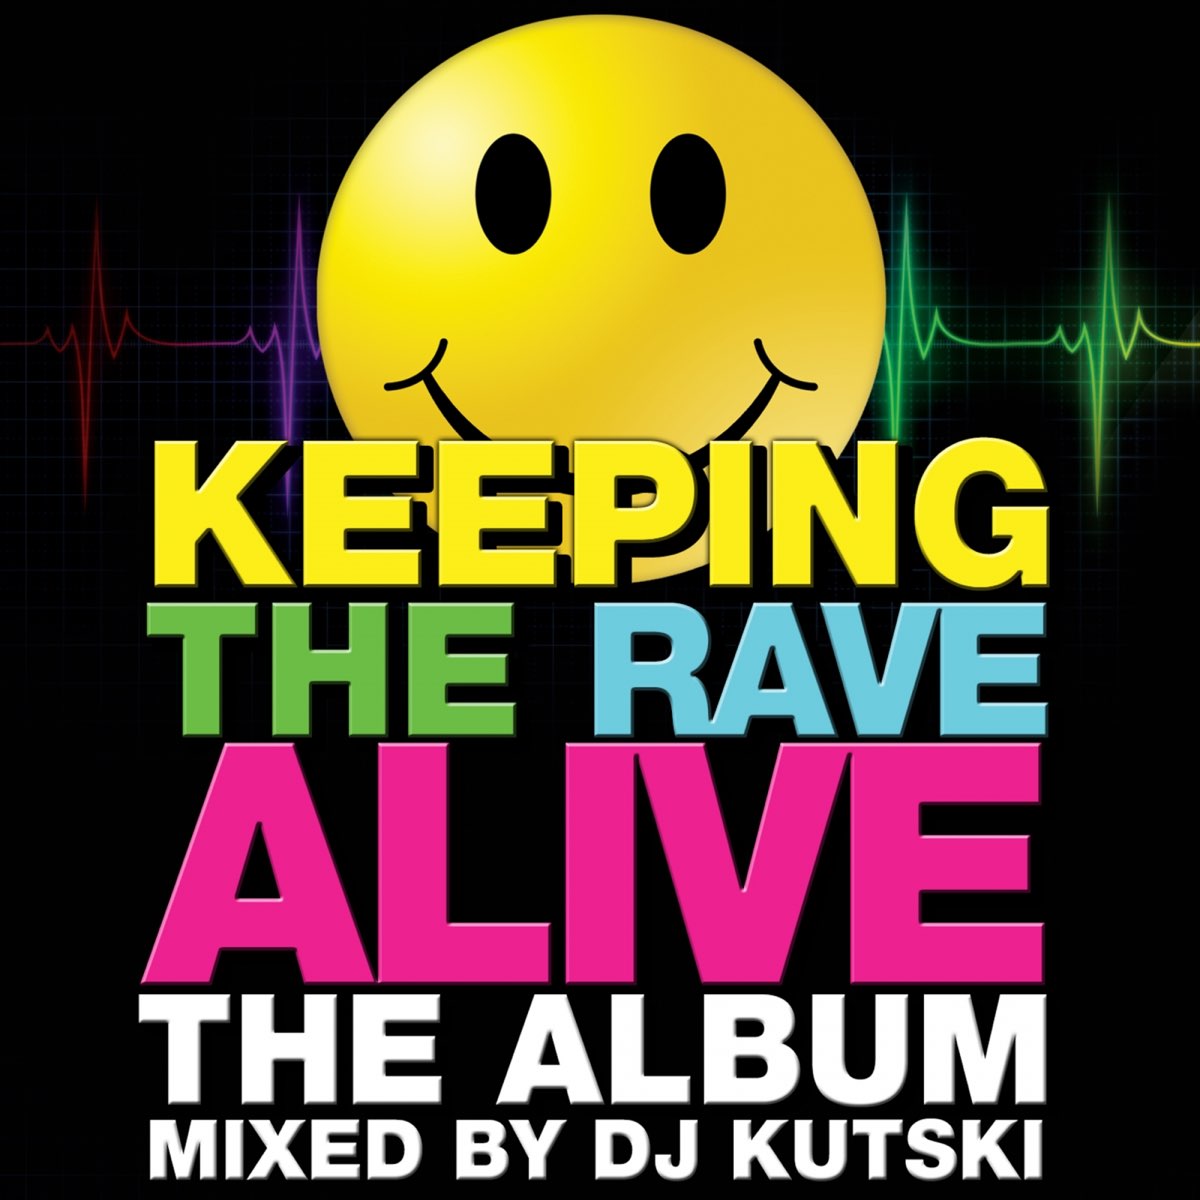 Alive mix. Kutski – keeping the Rave Alive. Картинка save the Rave. Keeping the Rave Alive 2022 album. "All the Rave".